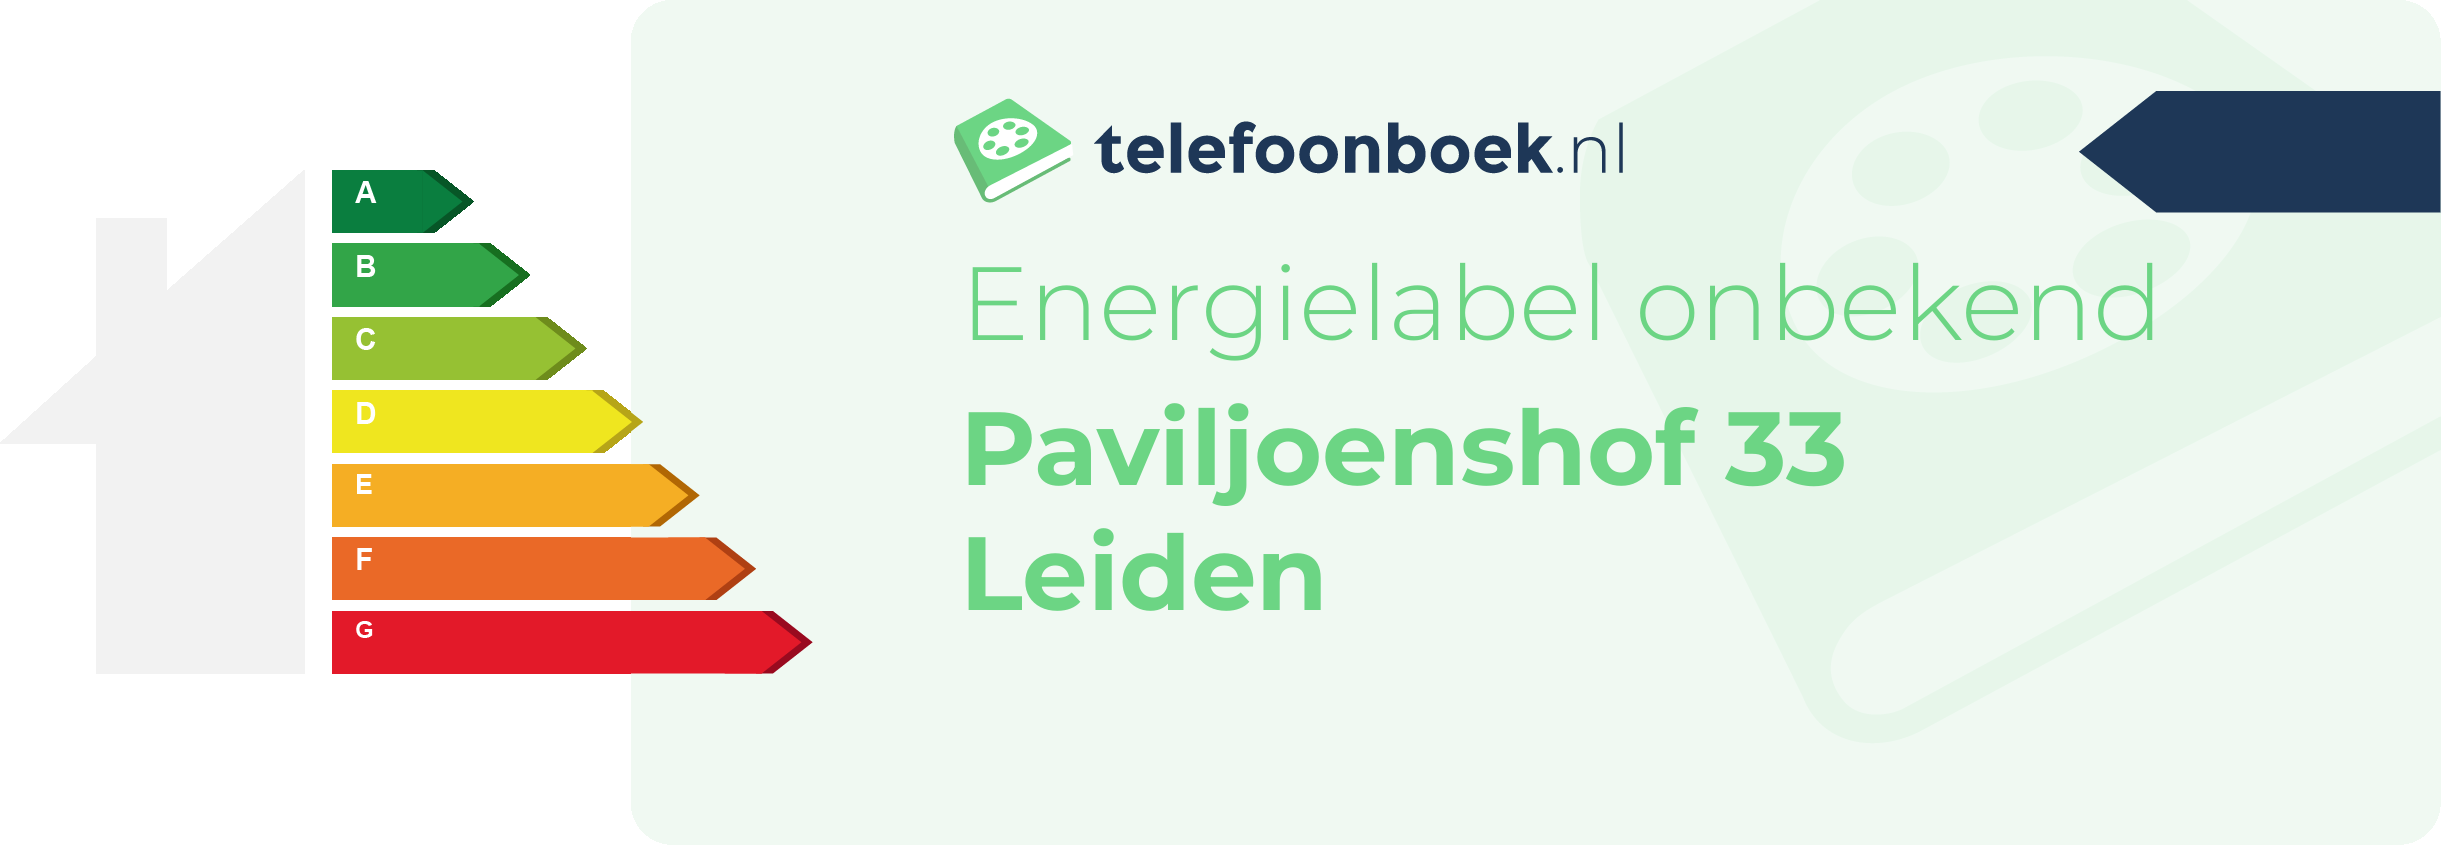 Energielabel Paviljoenshof 33 Leiden